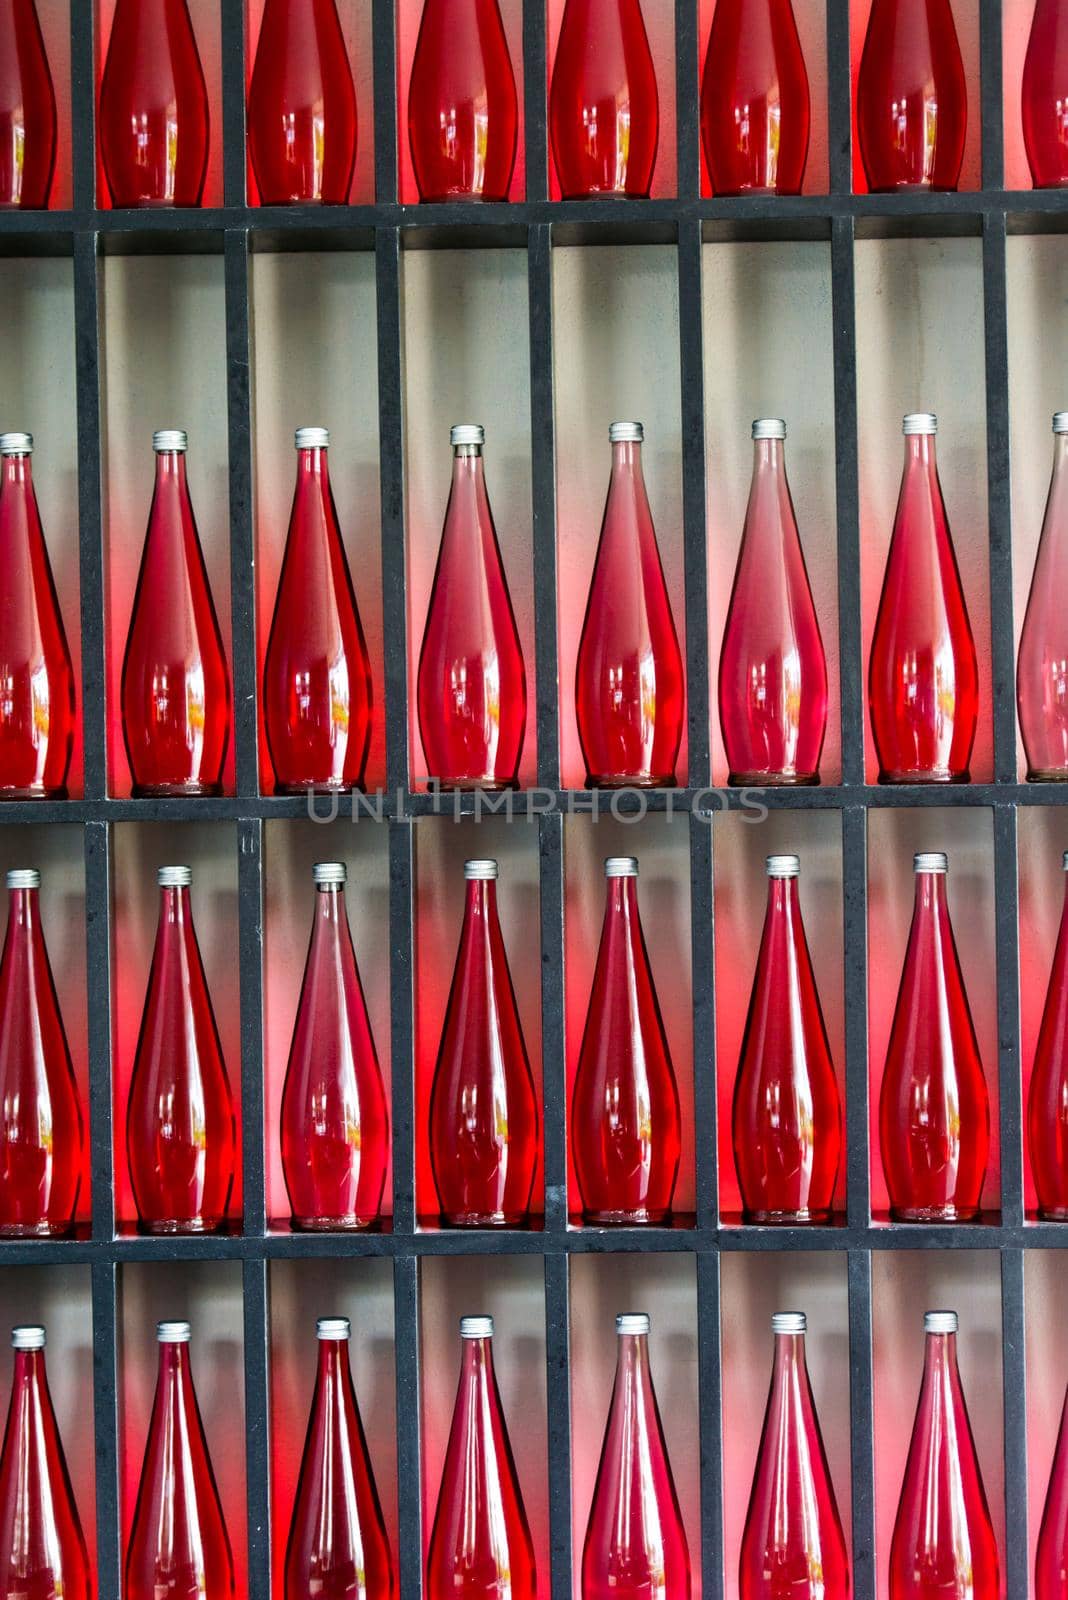 bottles of red juice in modern restaurant by dotshock